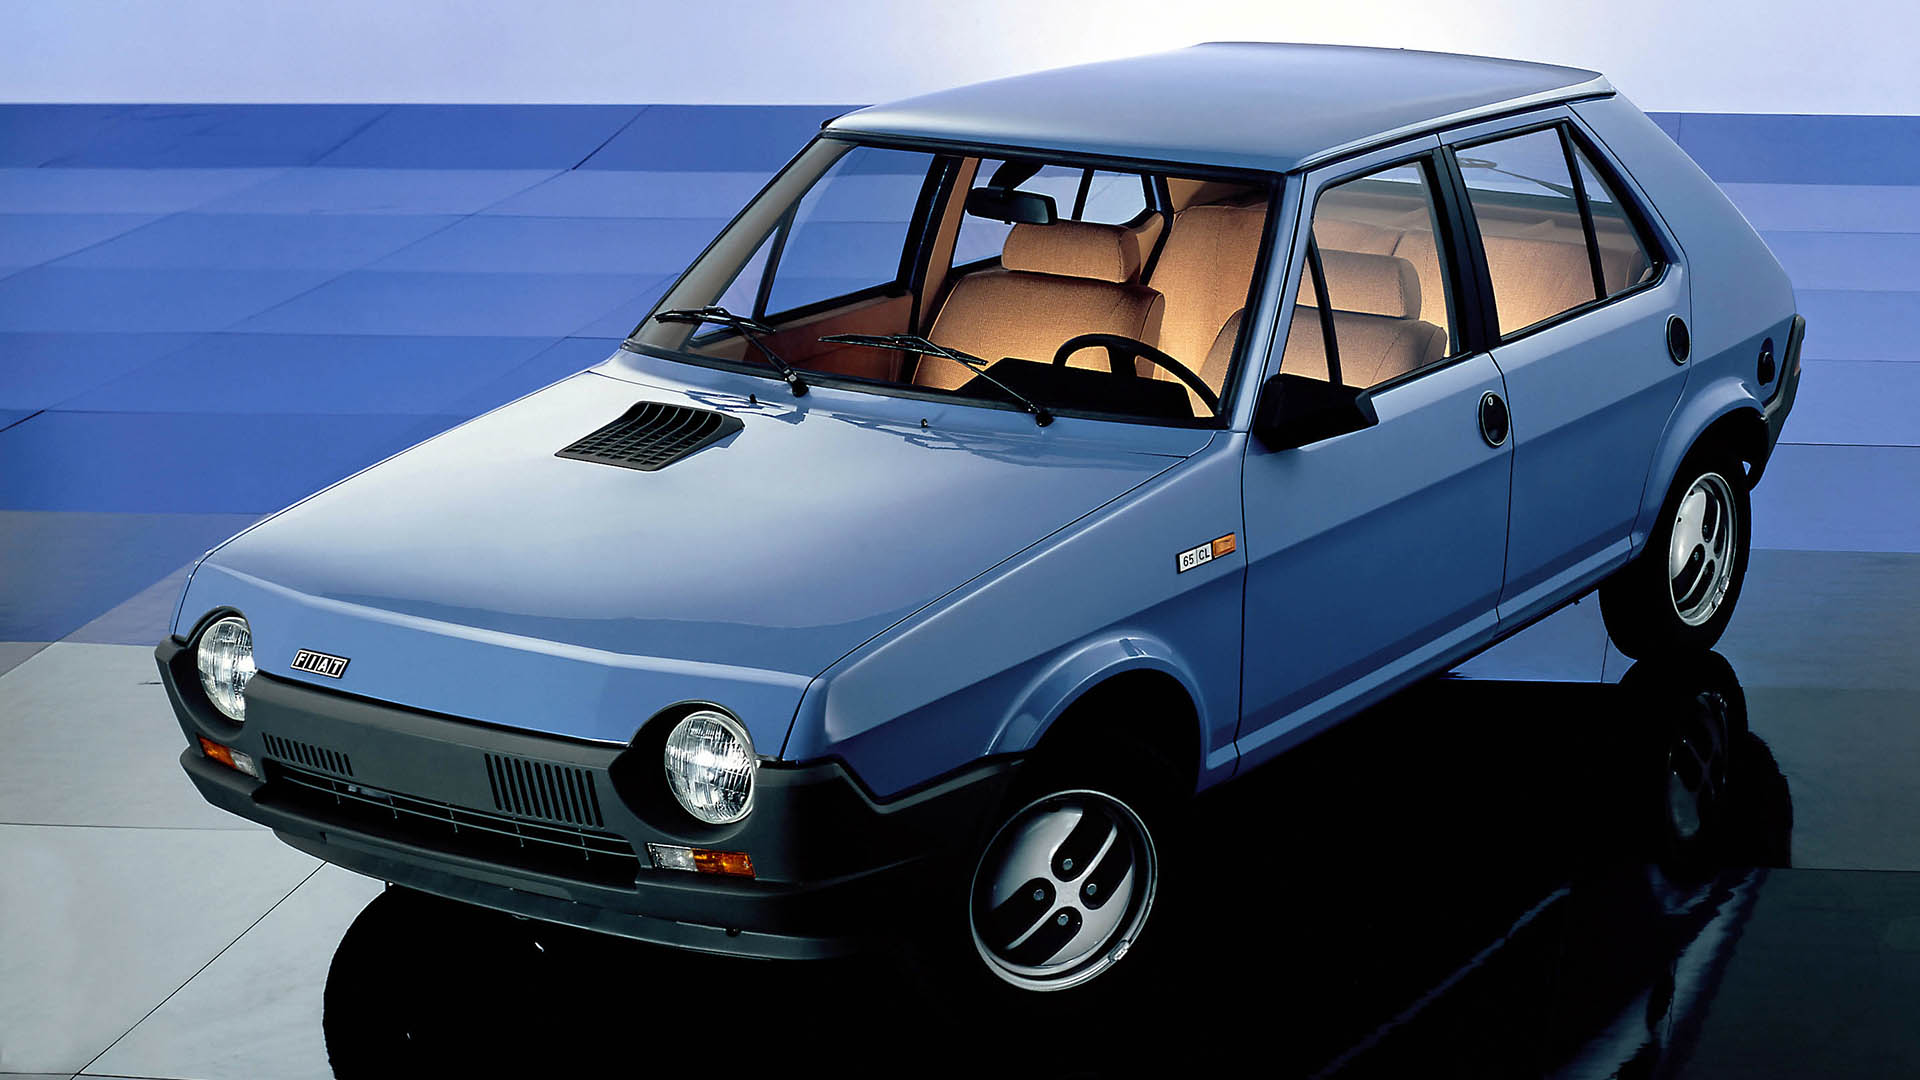 1979: Fiat Ritmo and Strada